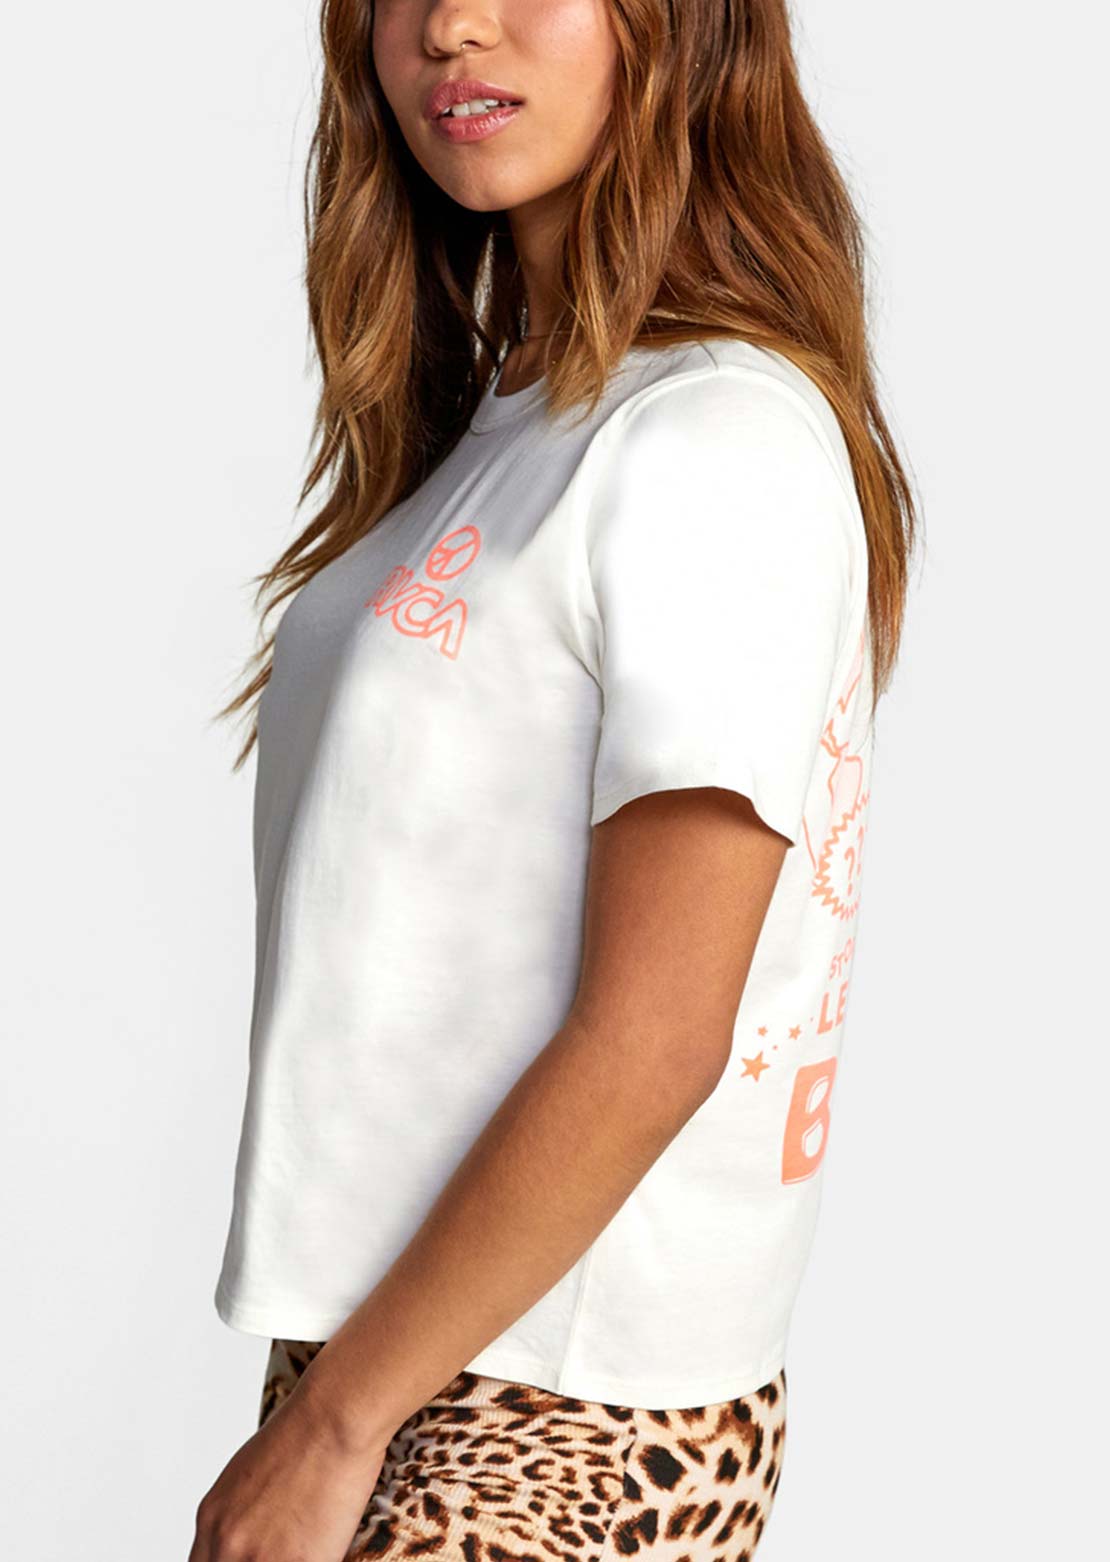 RVCA Women&#39;s The Heat T-Shirt Vintage White